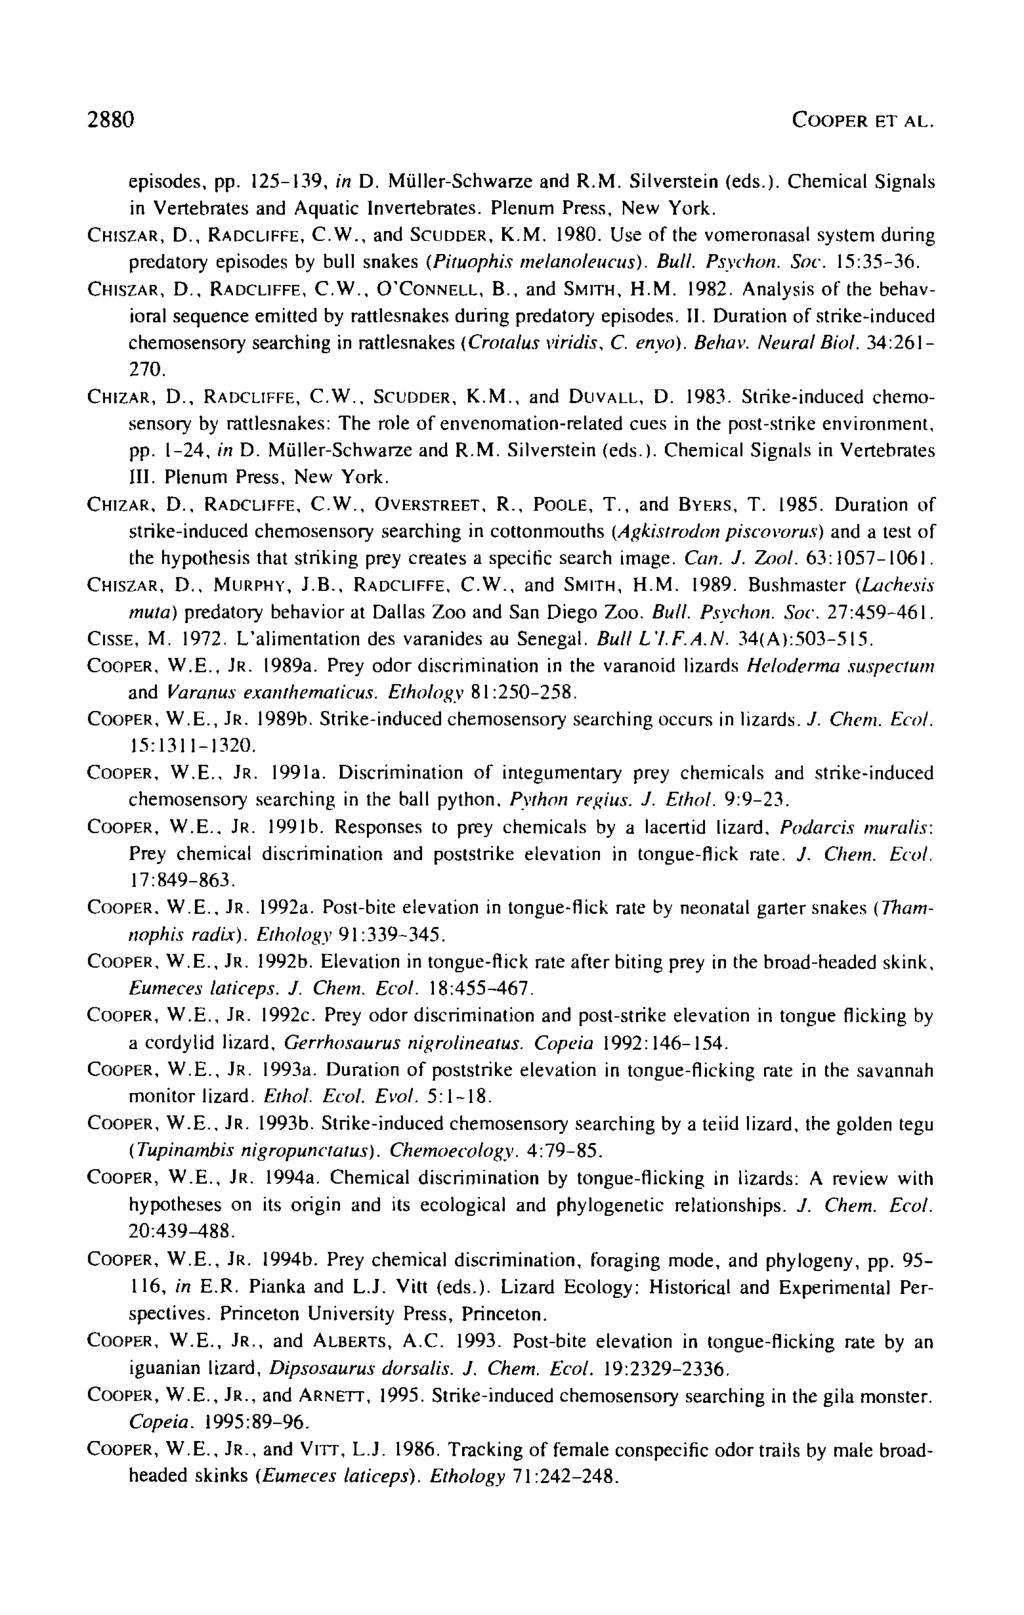 2880 COOPER ET AL. episodes, pp. 125-139, in D. Miiller-Schwarze and R.M. Silverstein (eds.). Chemical Signals in Vertebrates and Aquatic Invertebrates. Plenum Press, New York. CHISZAR, D.